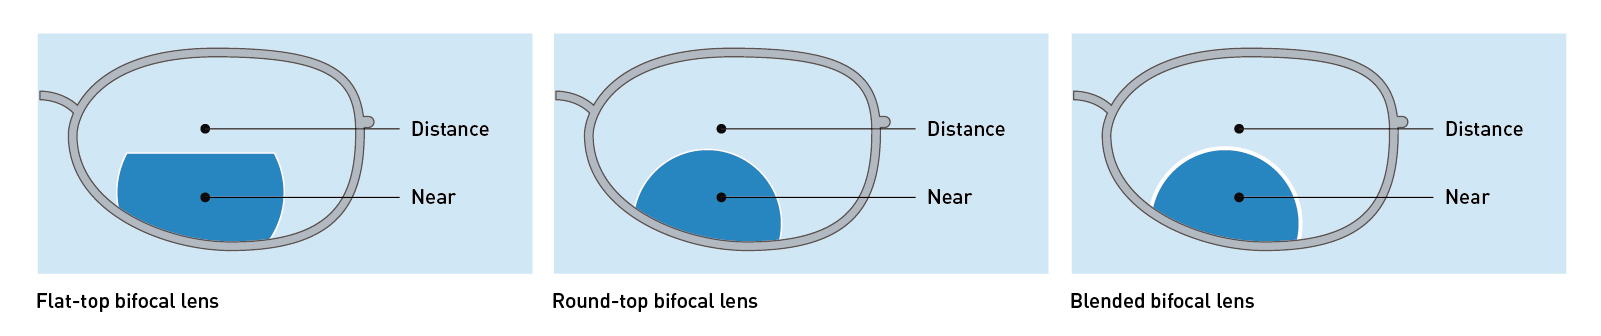 bifocal lens